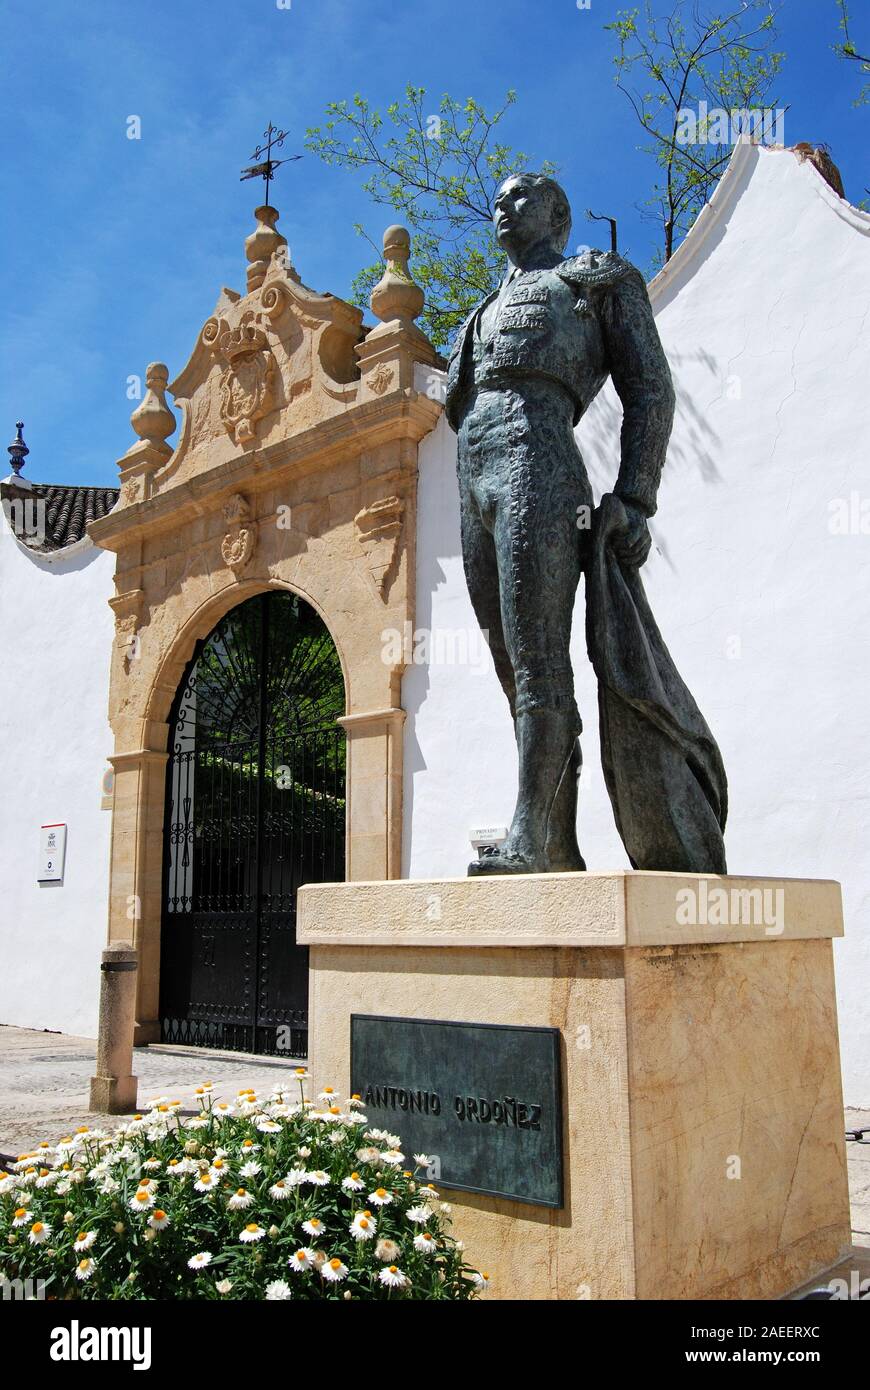 Statue en bronze de la matador Antonio Ordonez en dehors de l'arène, Ronda, Province de Malaga, Andalousie, Espagne, Europe. Banque D'Images